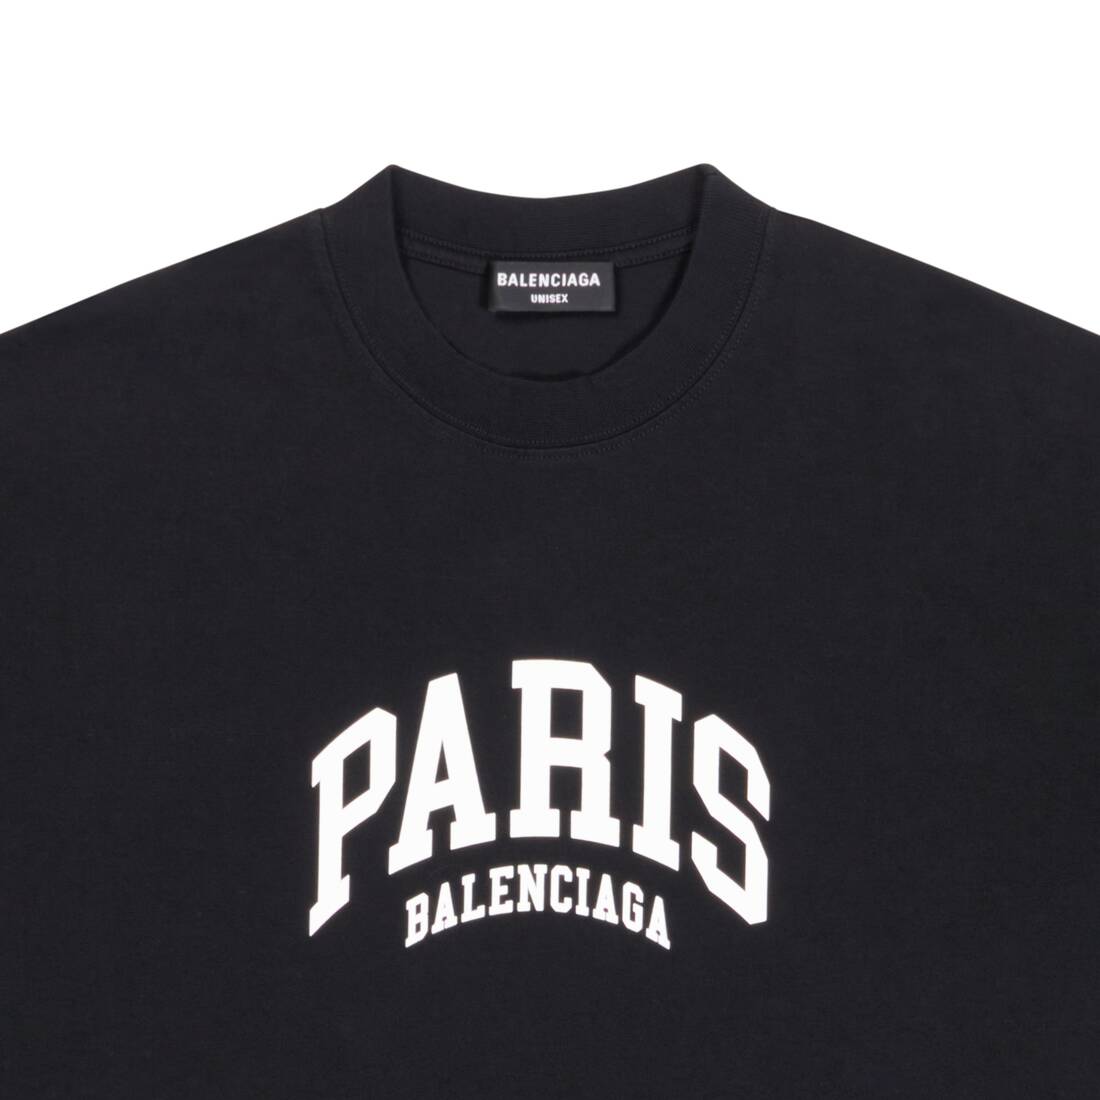 Balenciaga Paris Logo Tshirt Black  The Factory KL